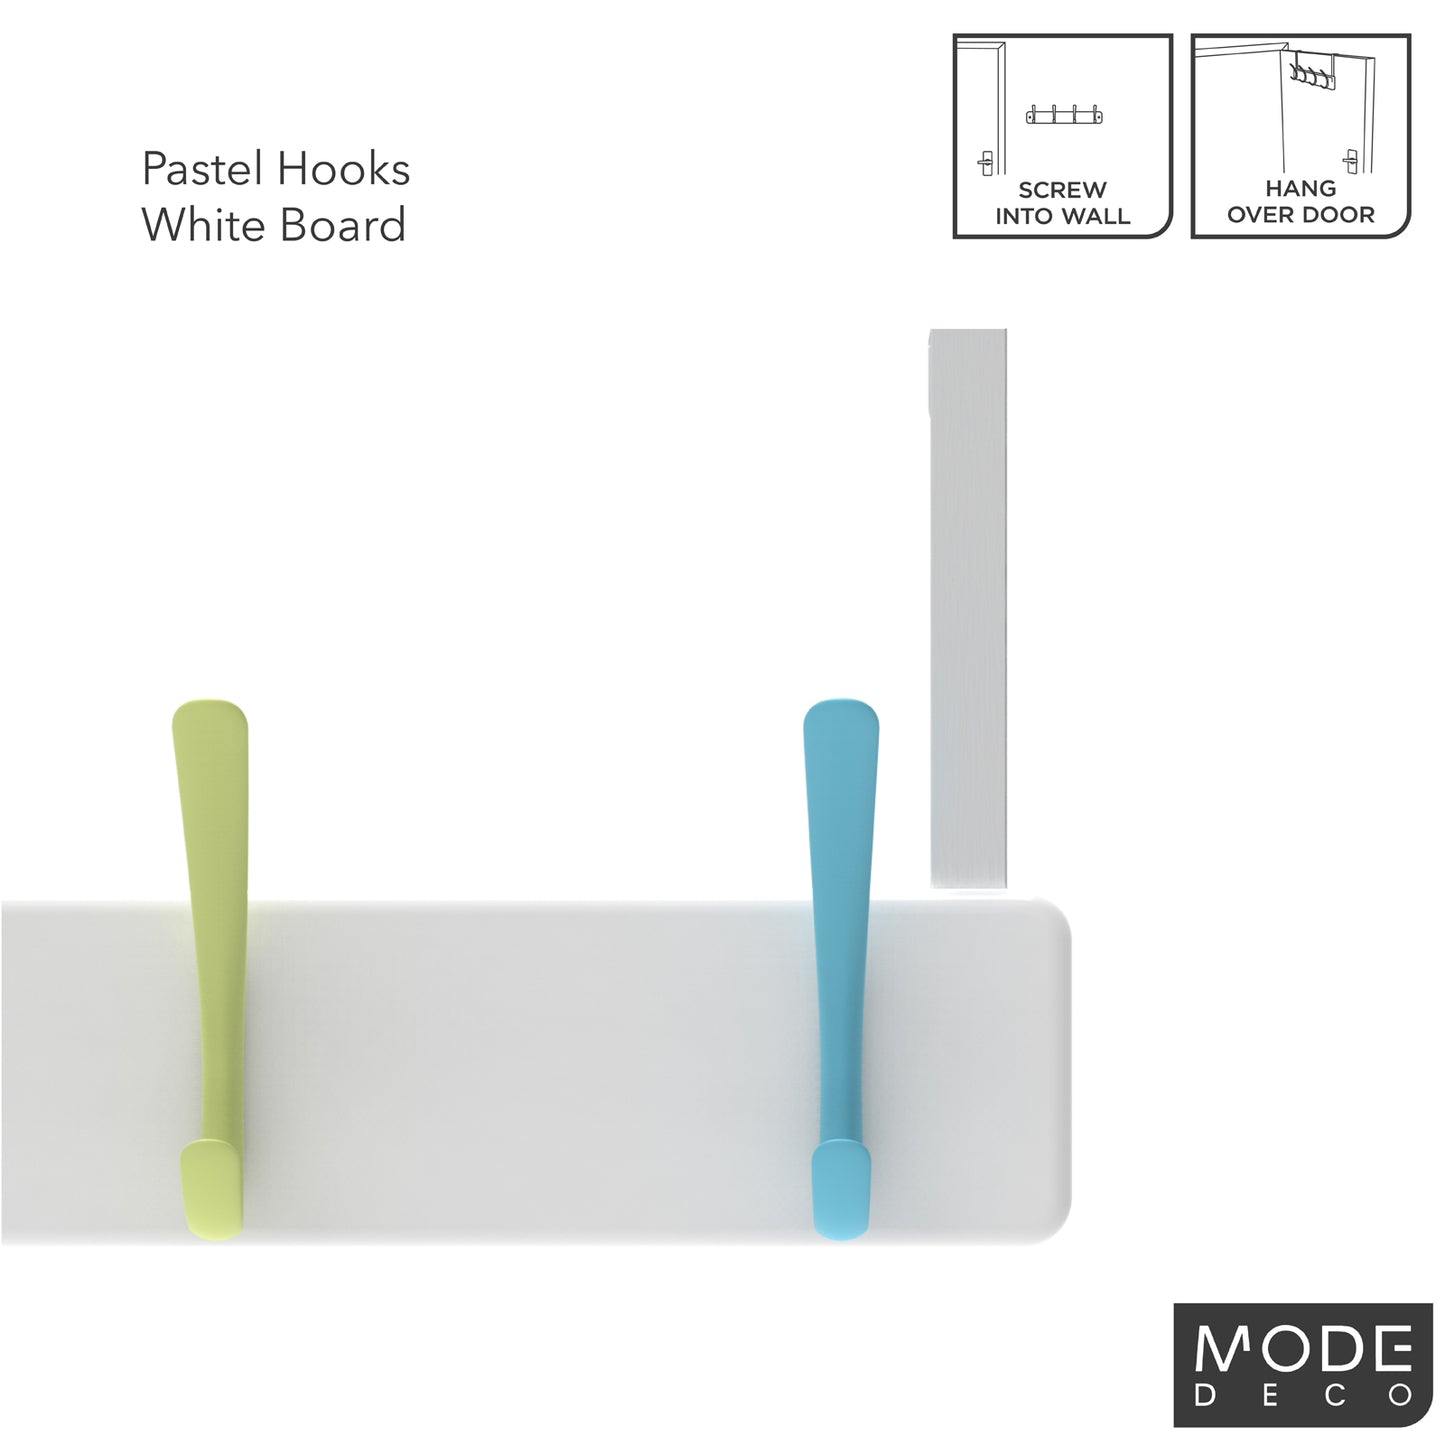 4 Pastel Hooks on White Board Over Door Hook